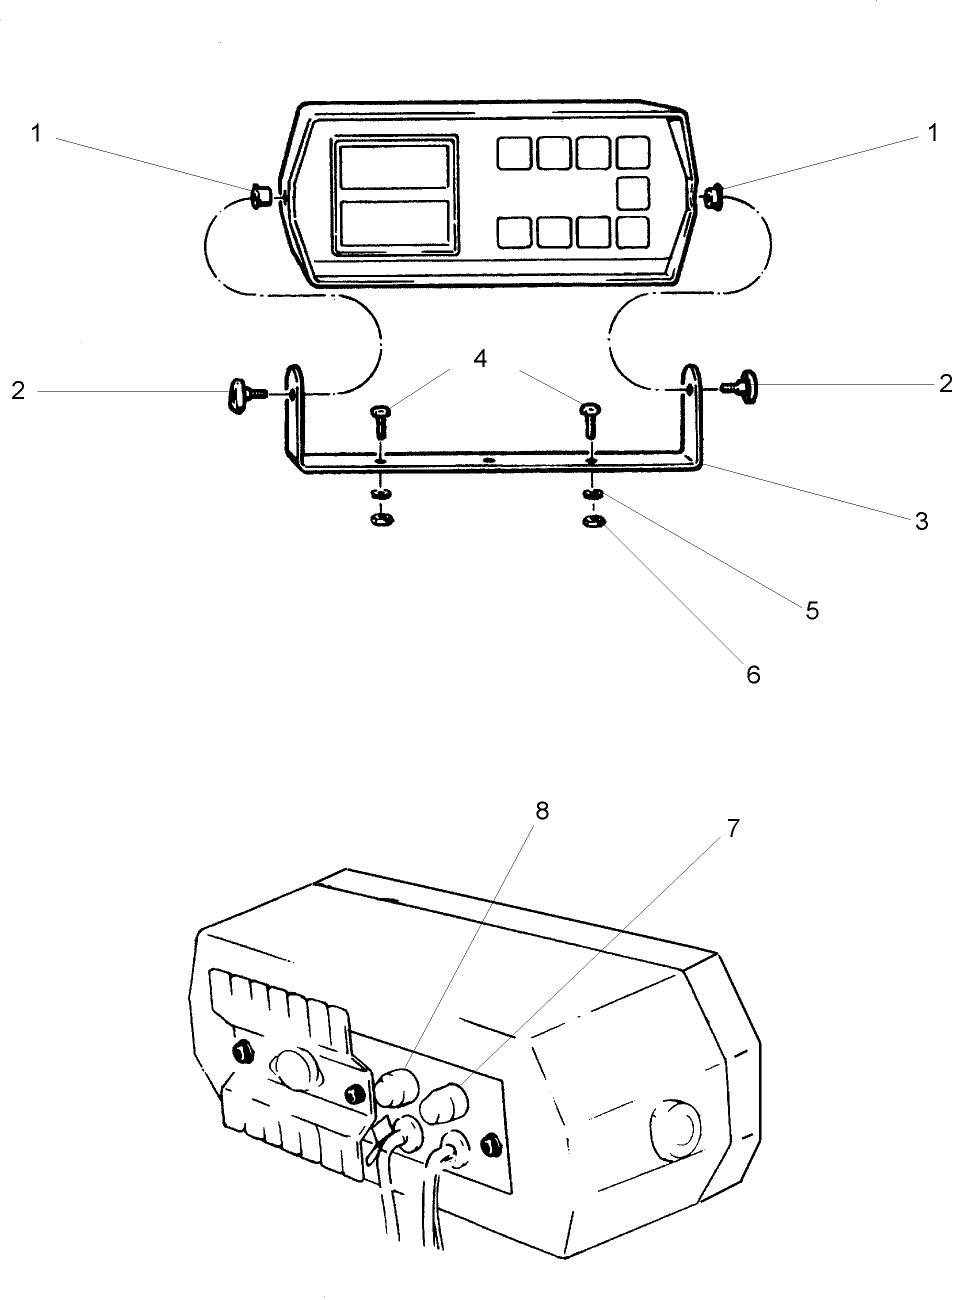 A.50.A(31) SM9000 - PLANTER MONITOR